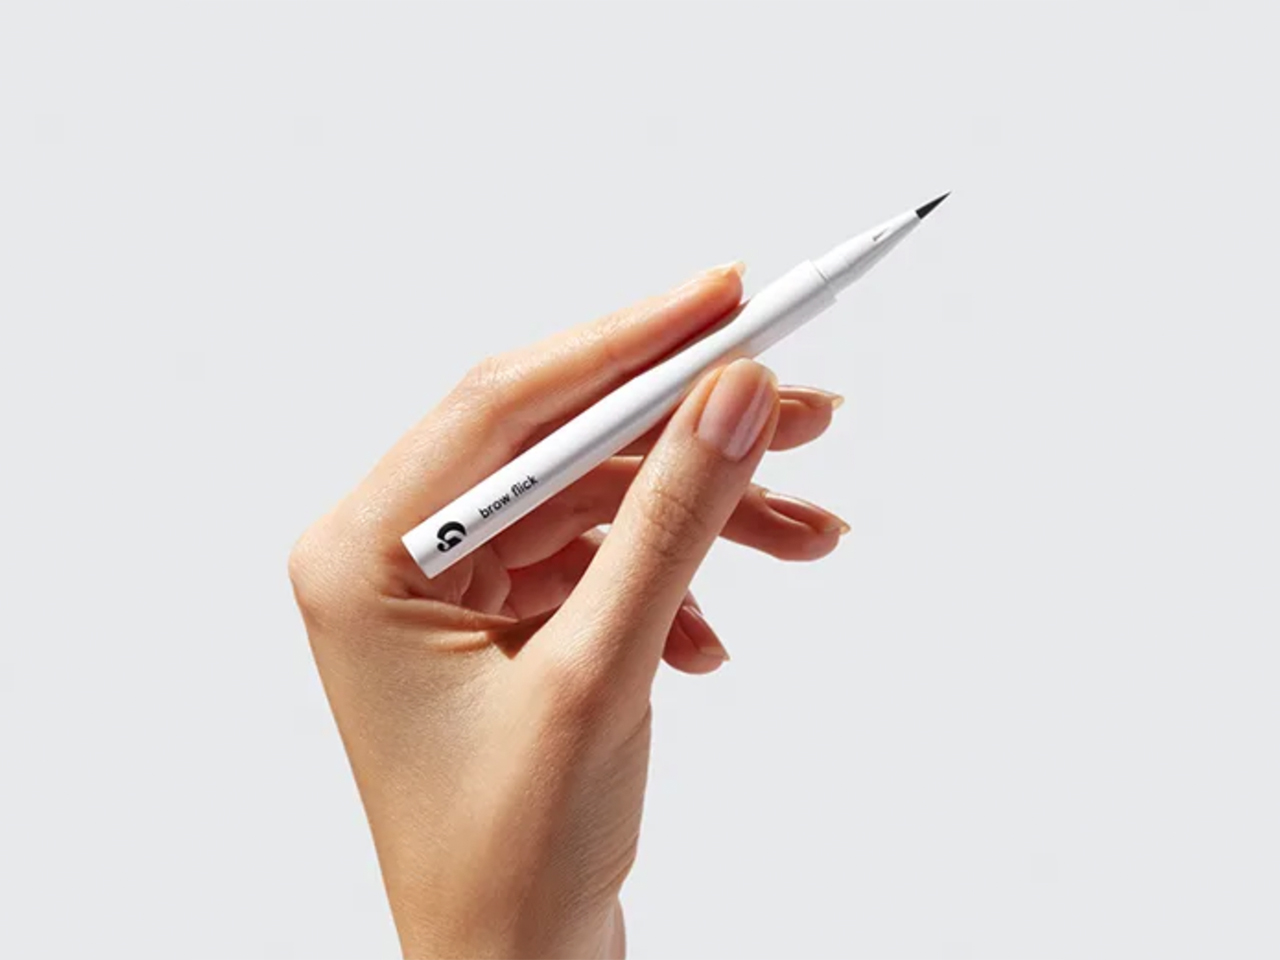 Glossier Brow Flick microfine detailing pen